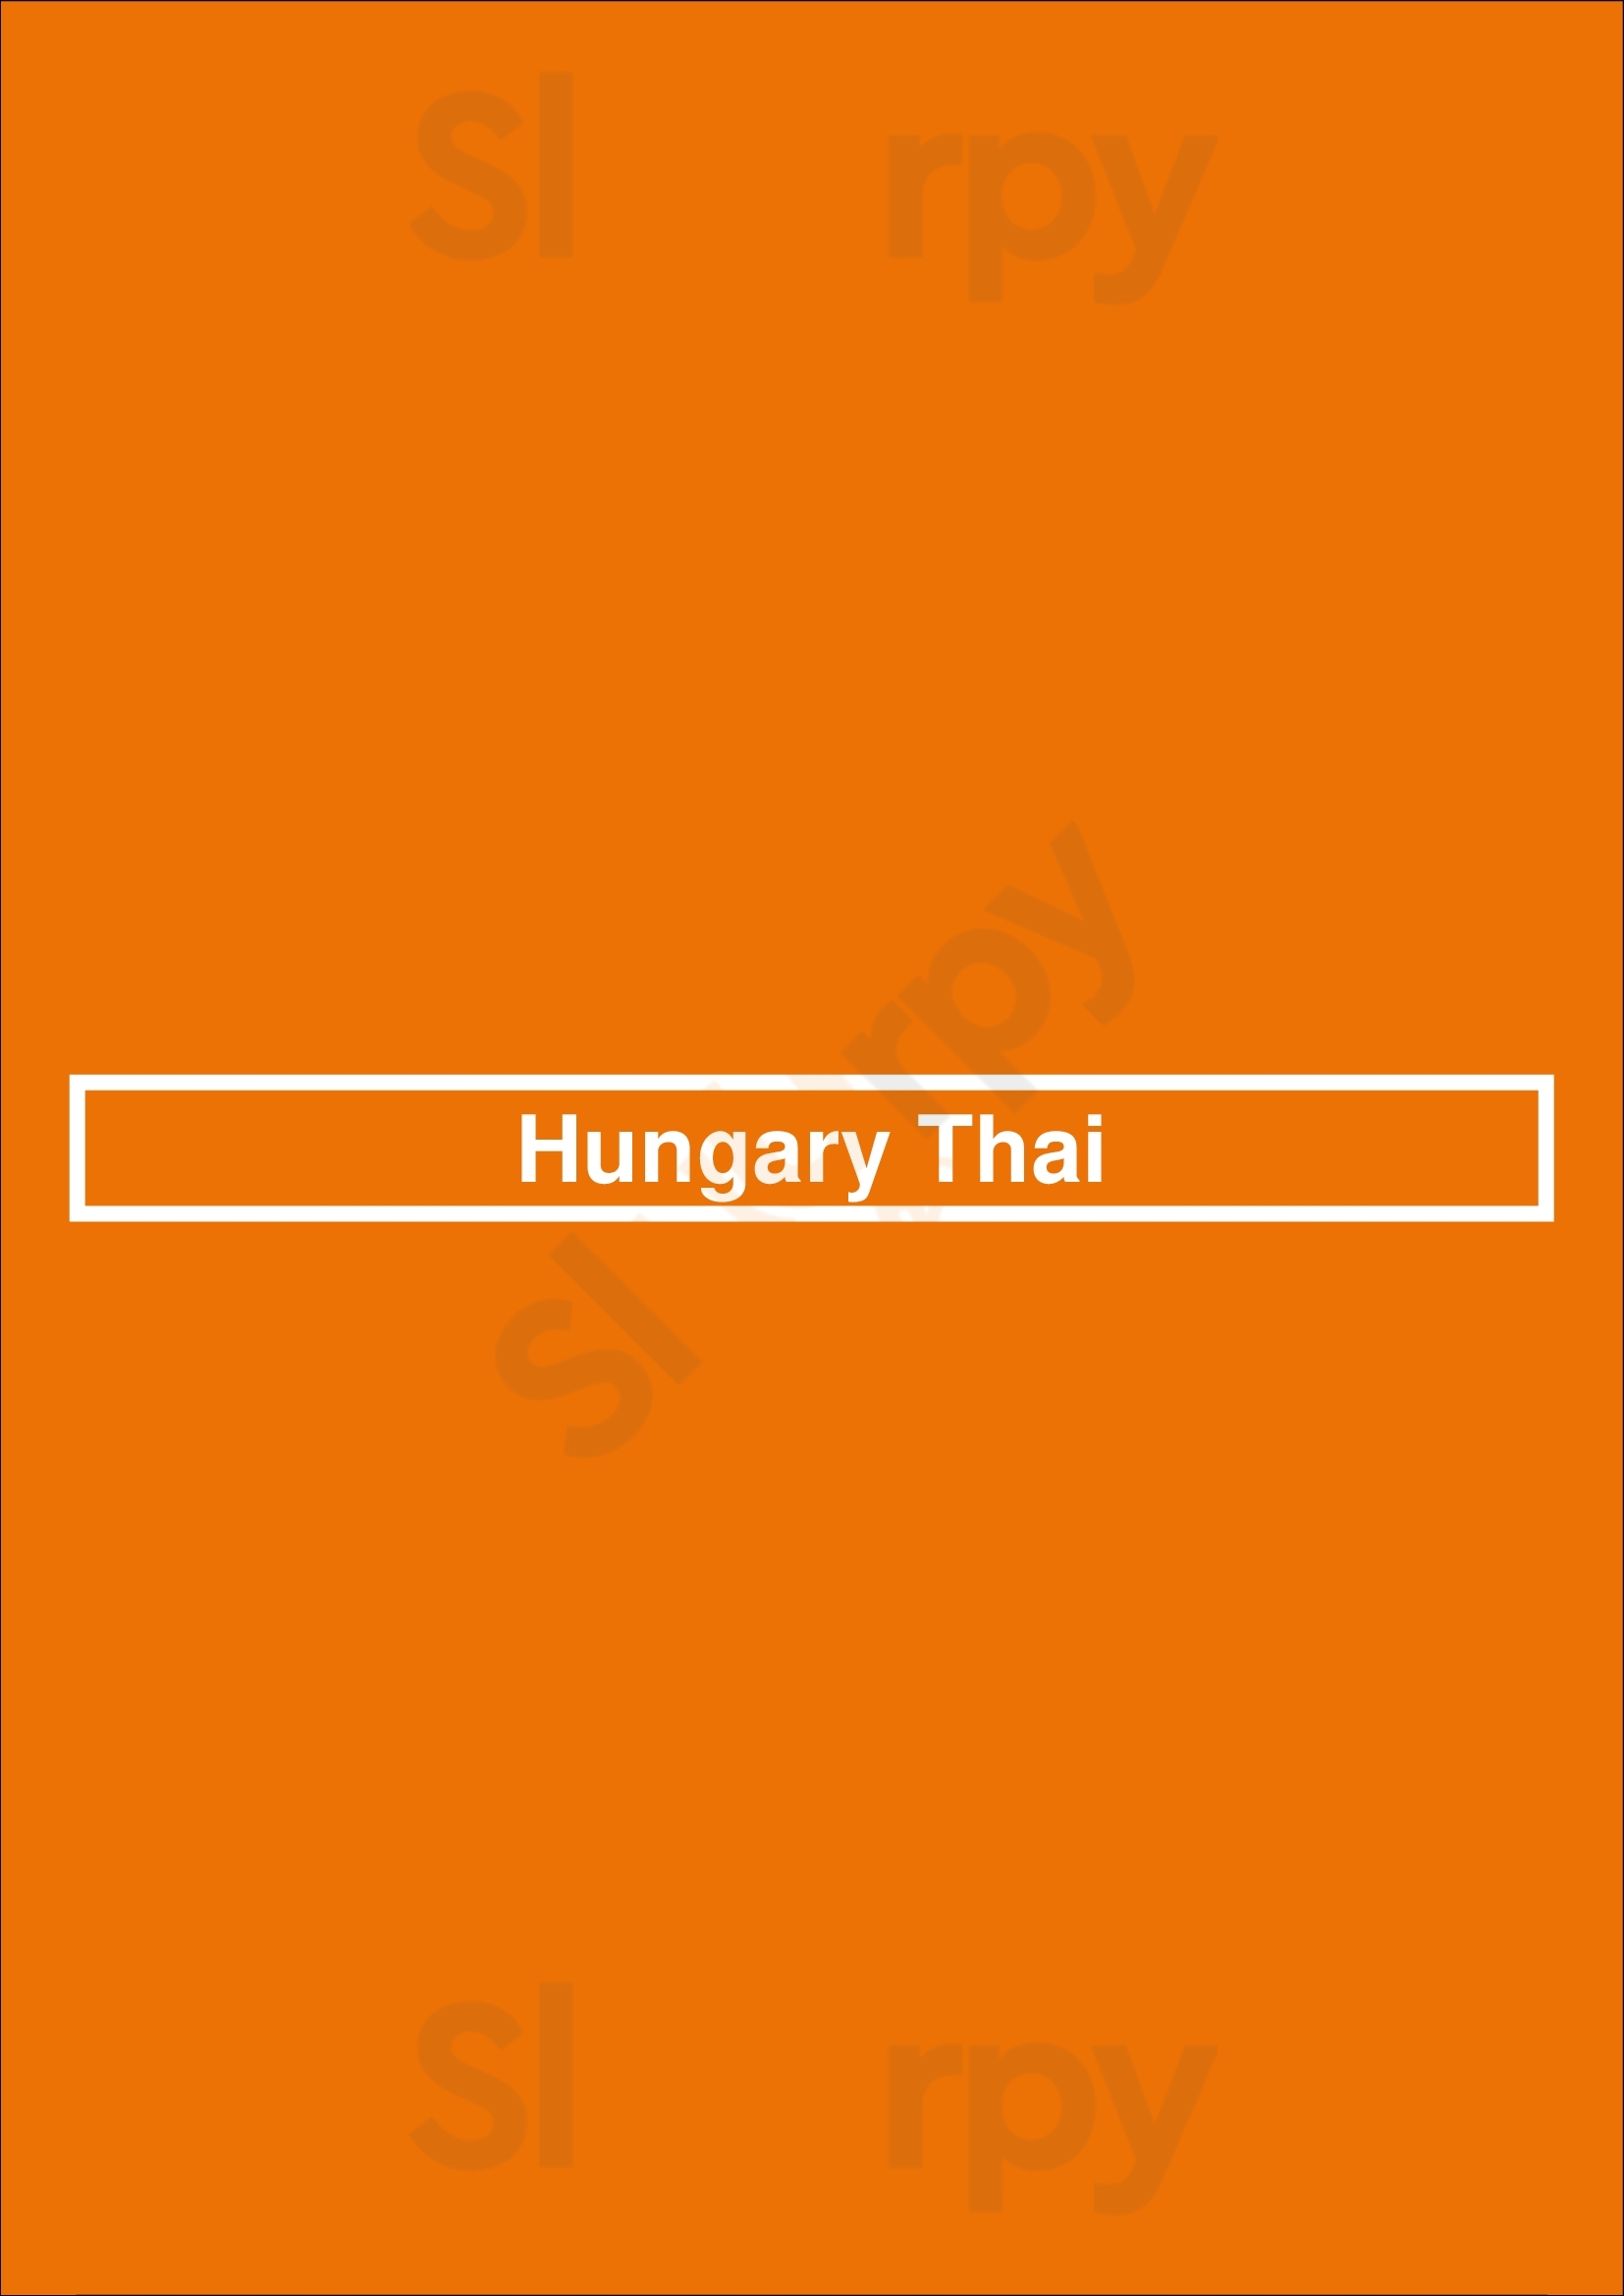 Hungary Thai Toronto Menu - 1